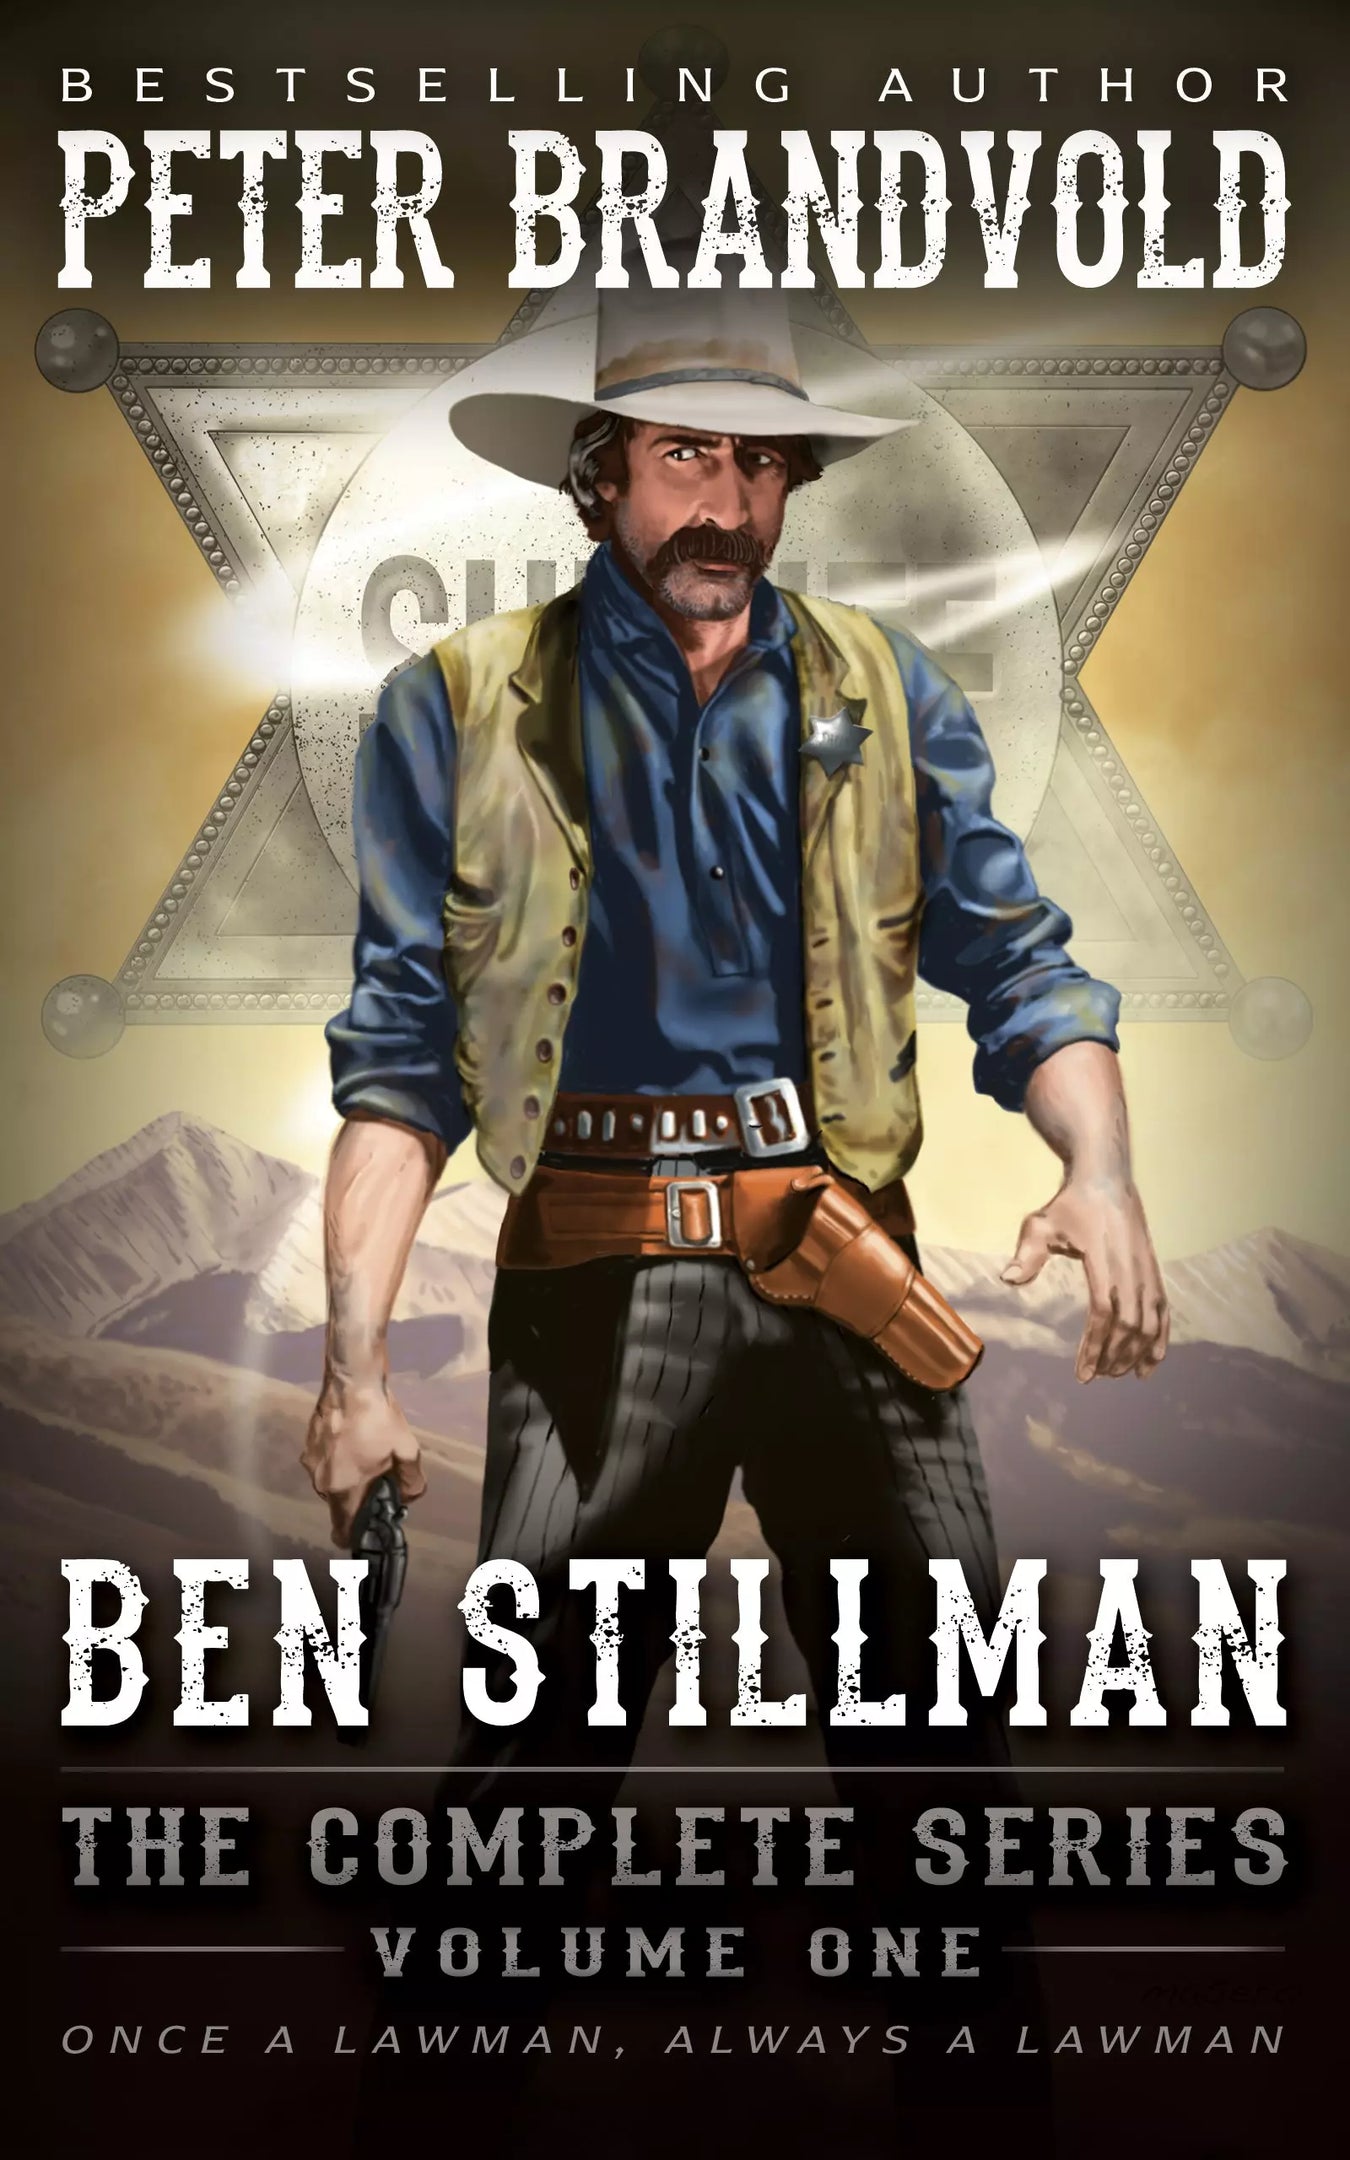 Sheriff Ben Stillman